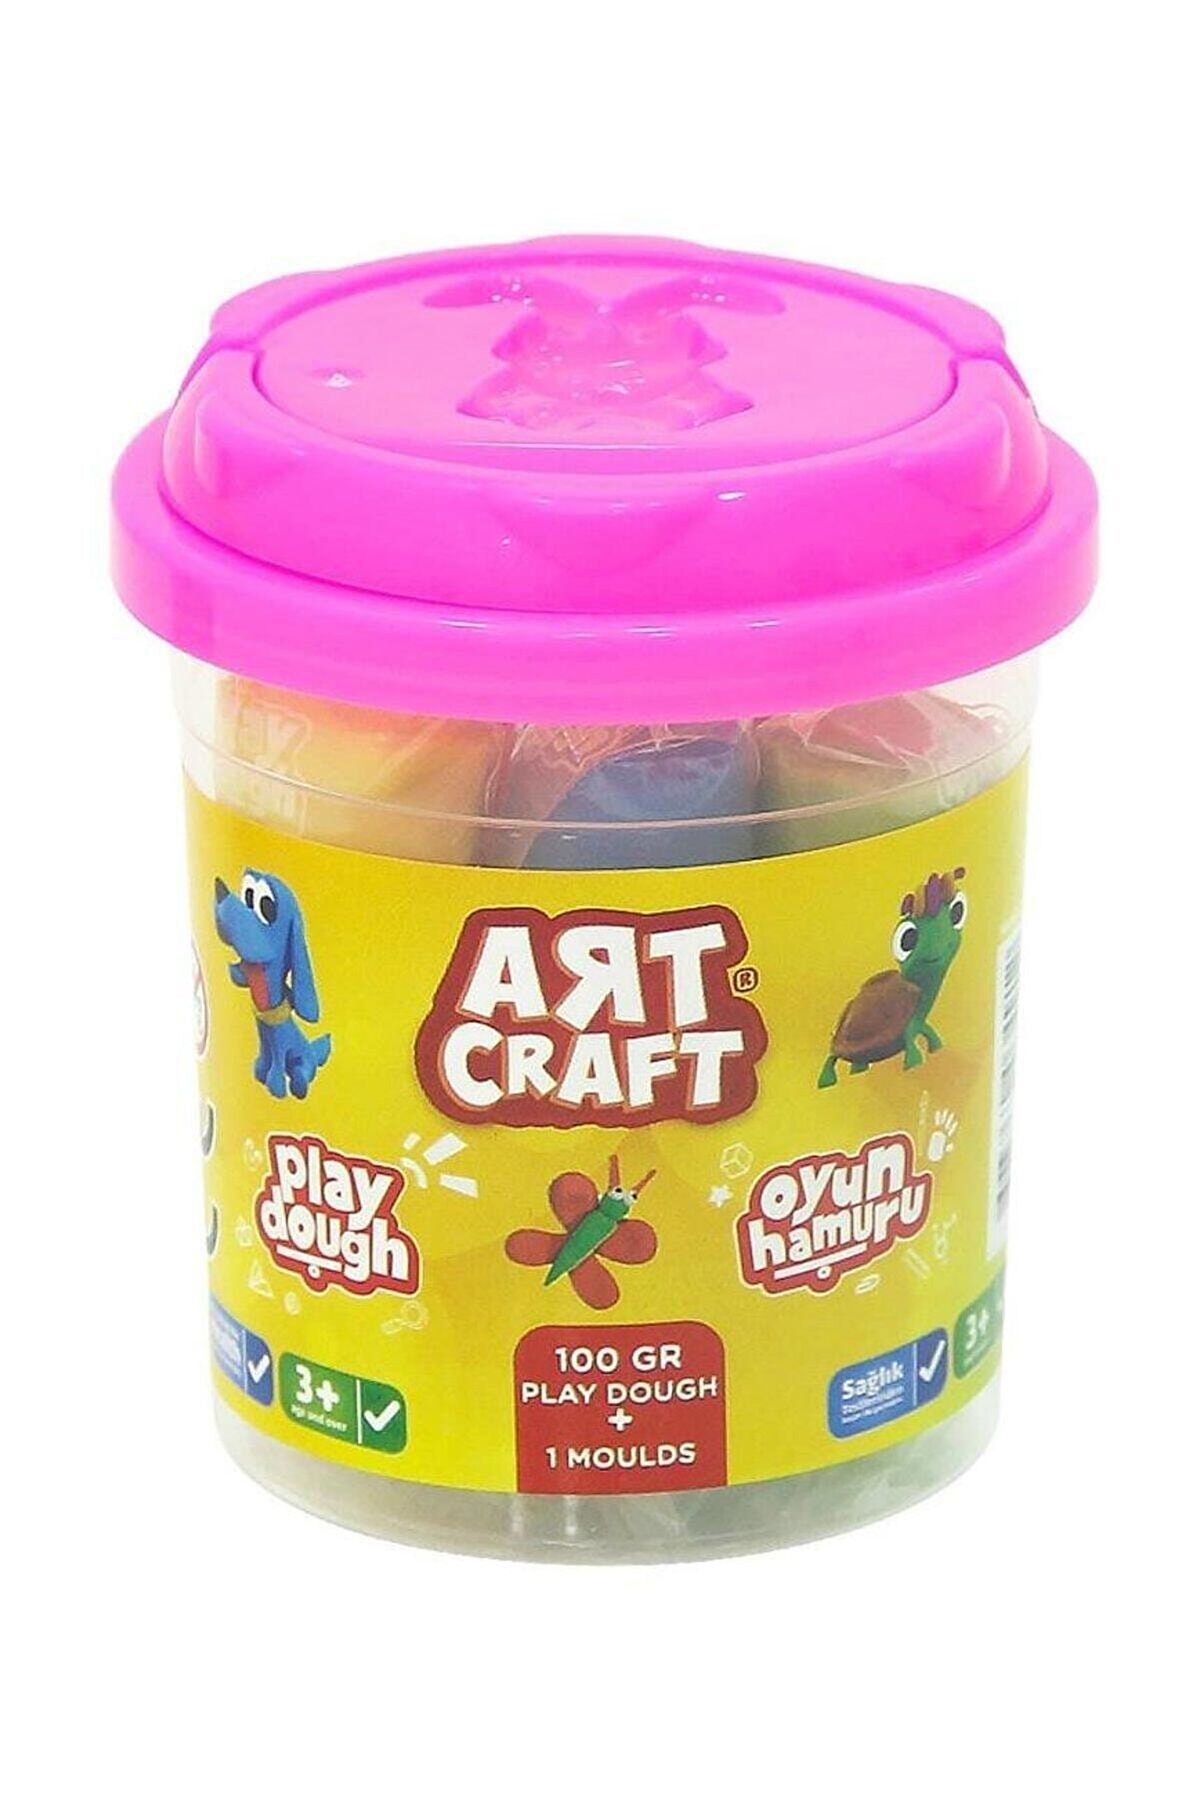 Art Craft Dede Küçük Kova 5 Renk 100 Gr Oyun Hamuru Pembe 3+ Yaş